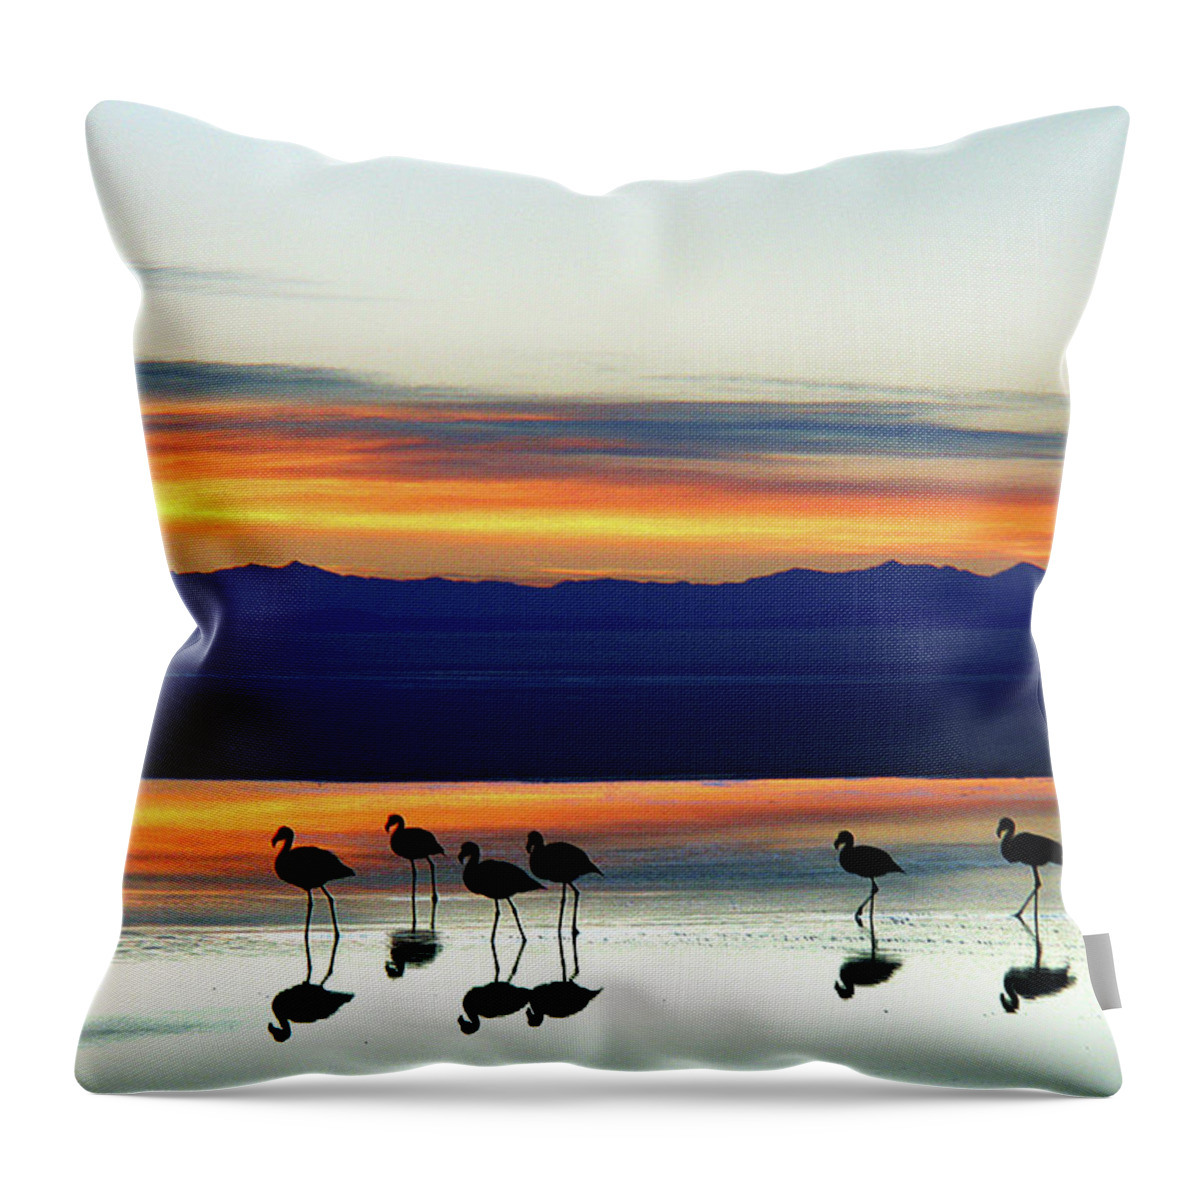 Tranquility Throw Pillow featuring the photograph Sunset On The Uyuni Salt Desert, Bolivia by Raúl Barrero Photography